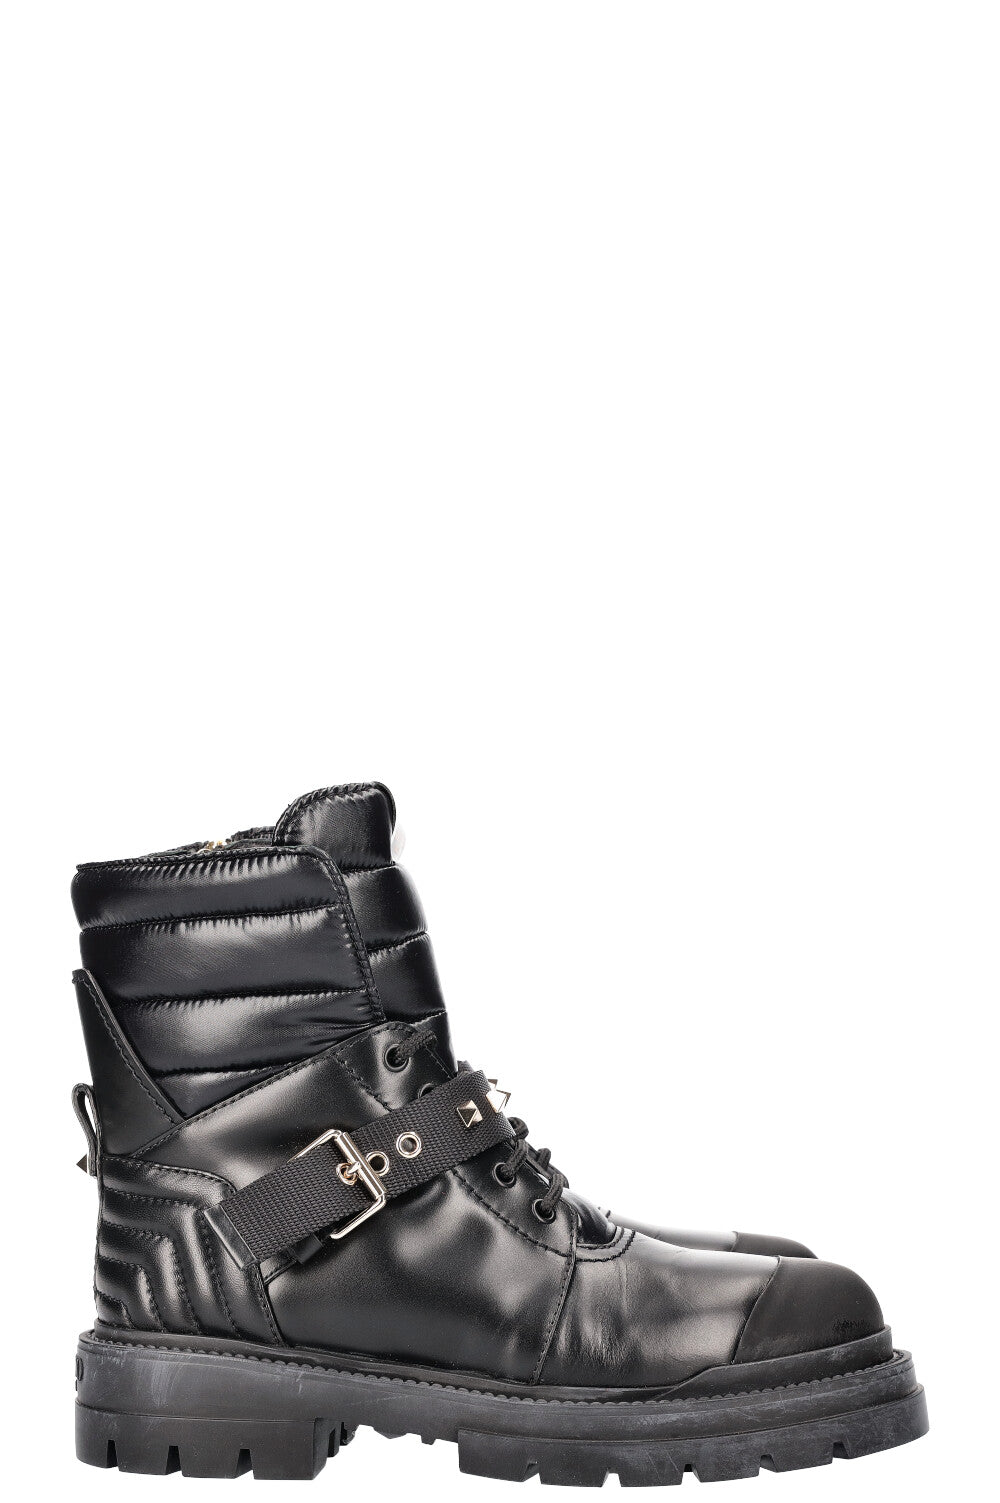 VALENTINO Rockstud Boots Black